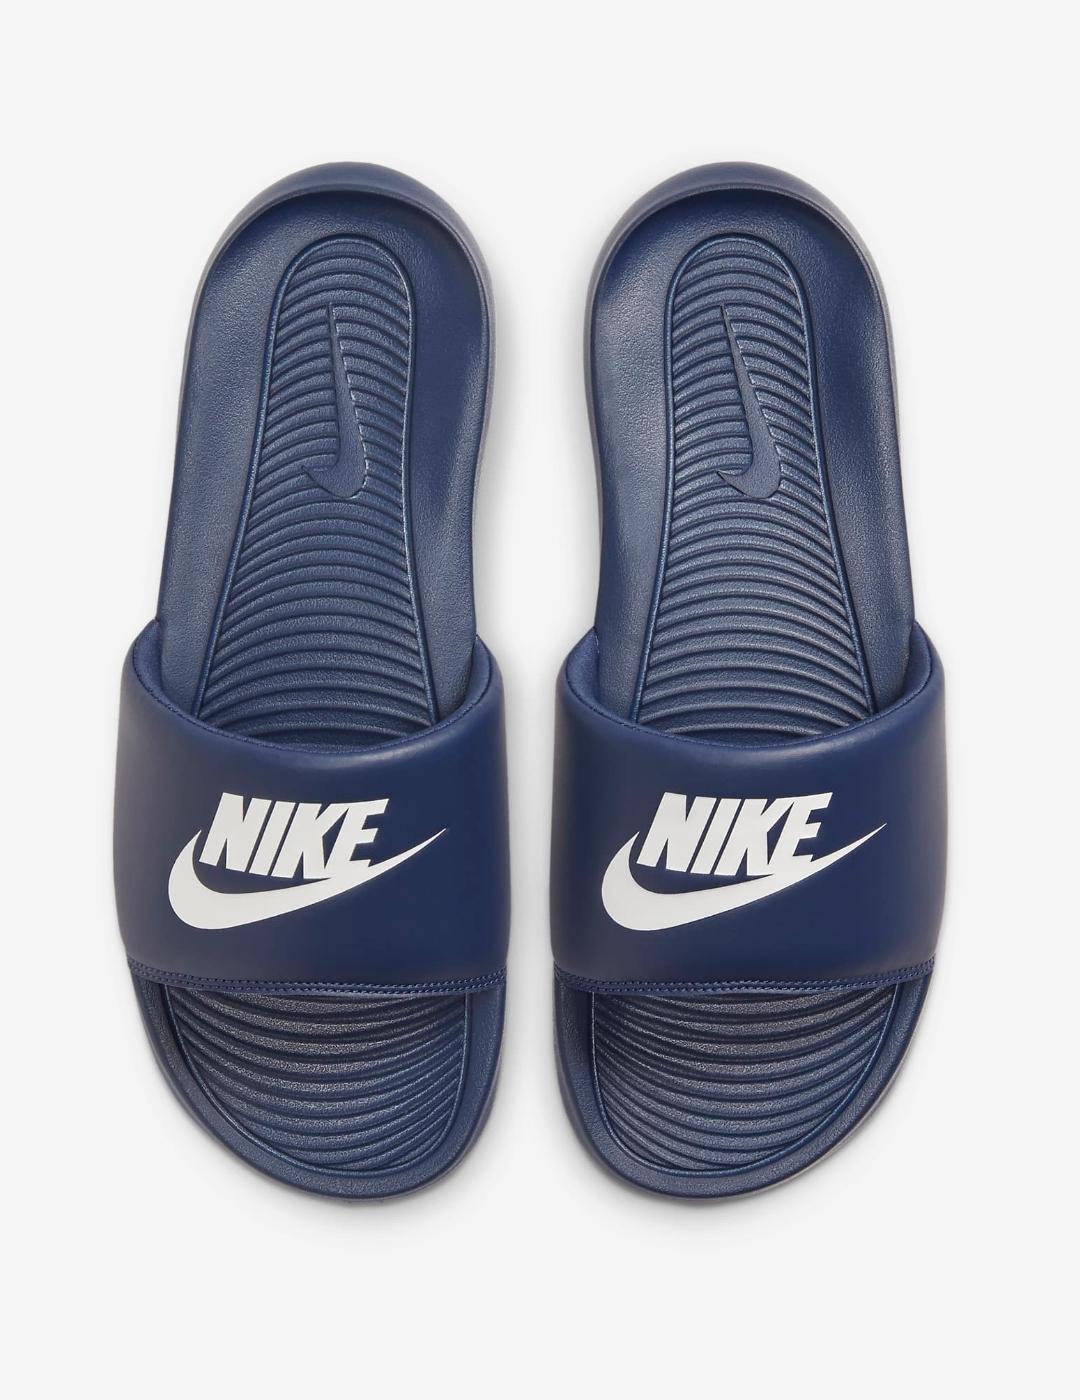 Chanclas Nike azul marino para hombre